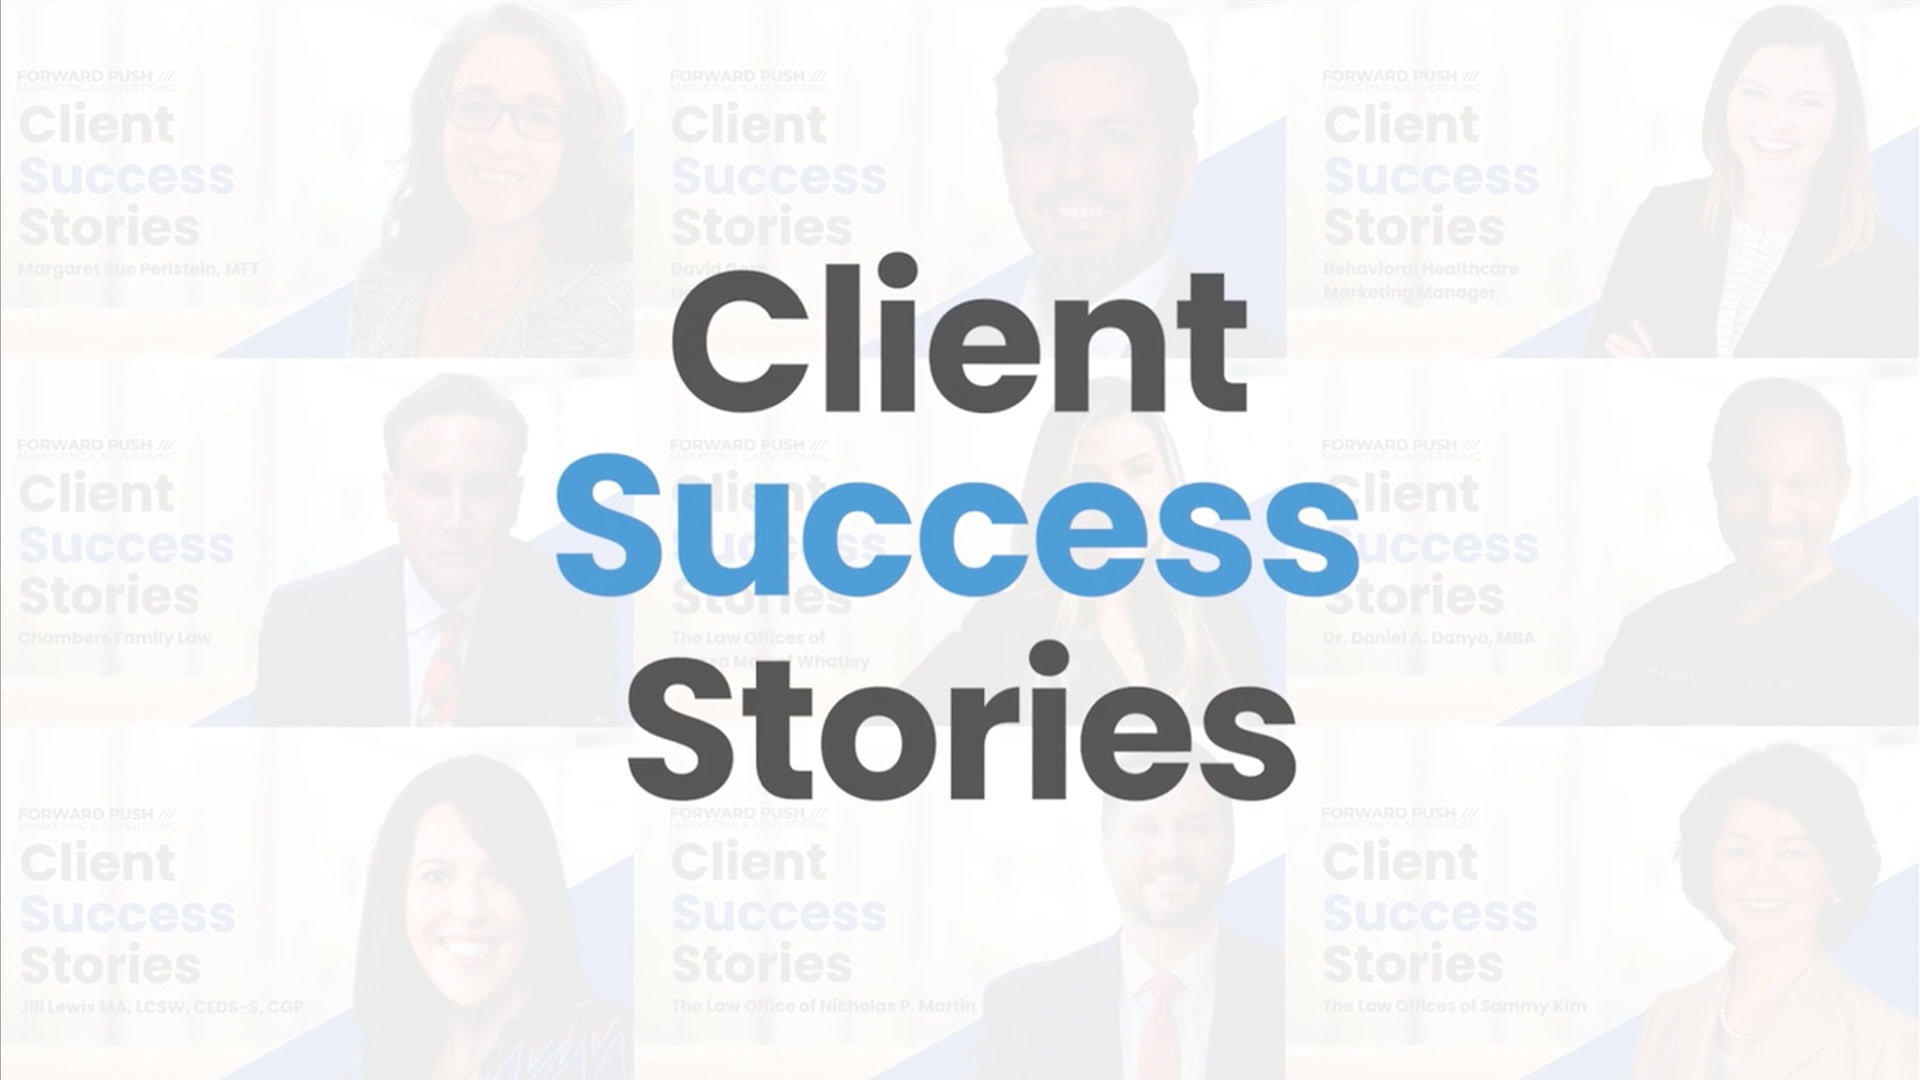 Client Success Stories banner with diverse professional portraits